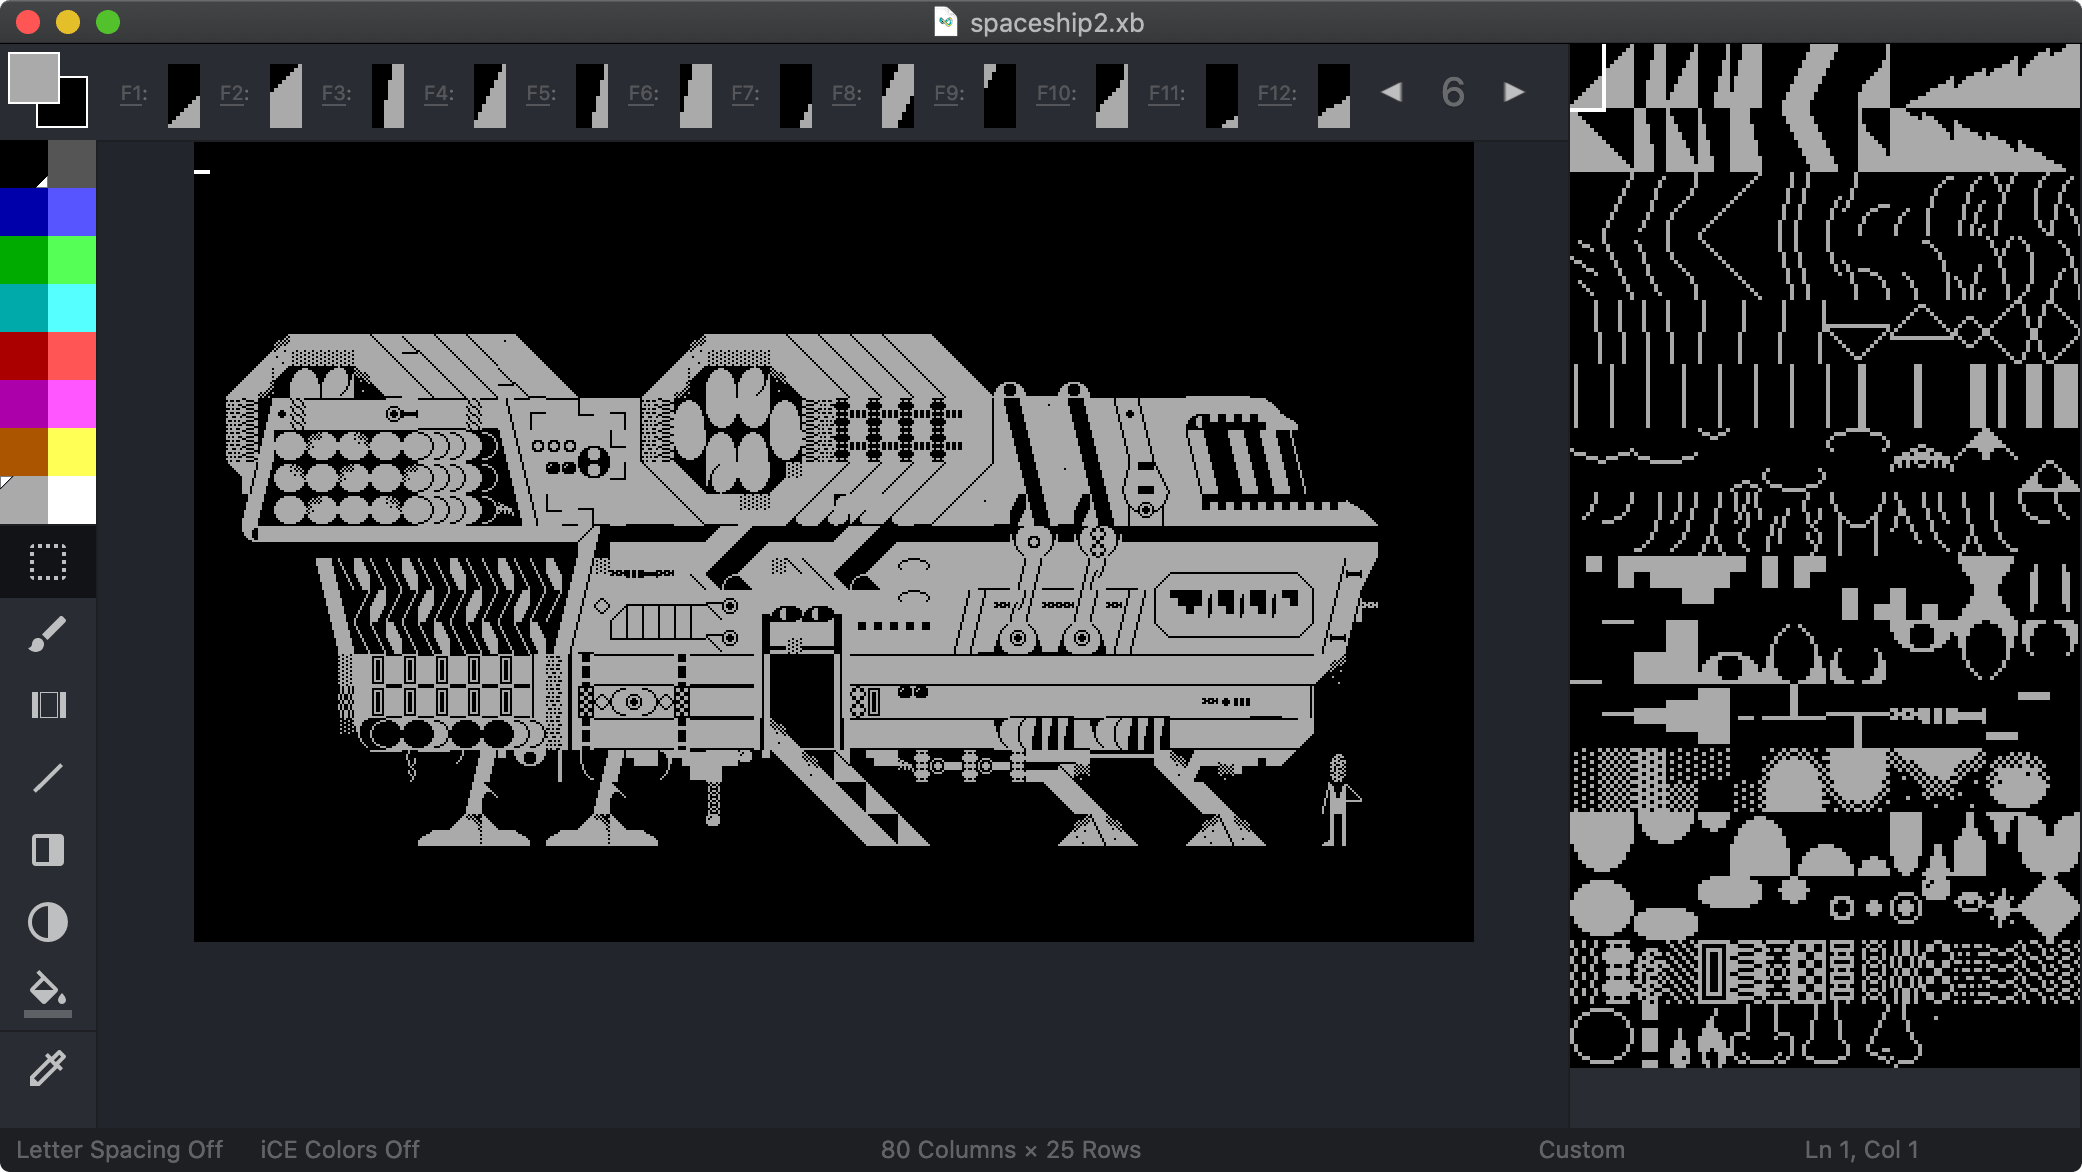 User interface of MoebiusXBIN, monochrome ASCII drawing of a spaceship.